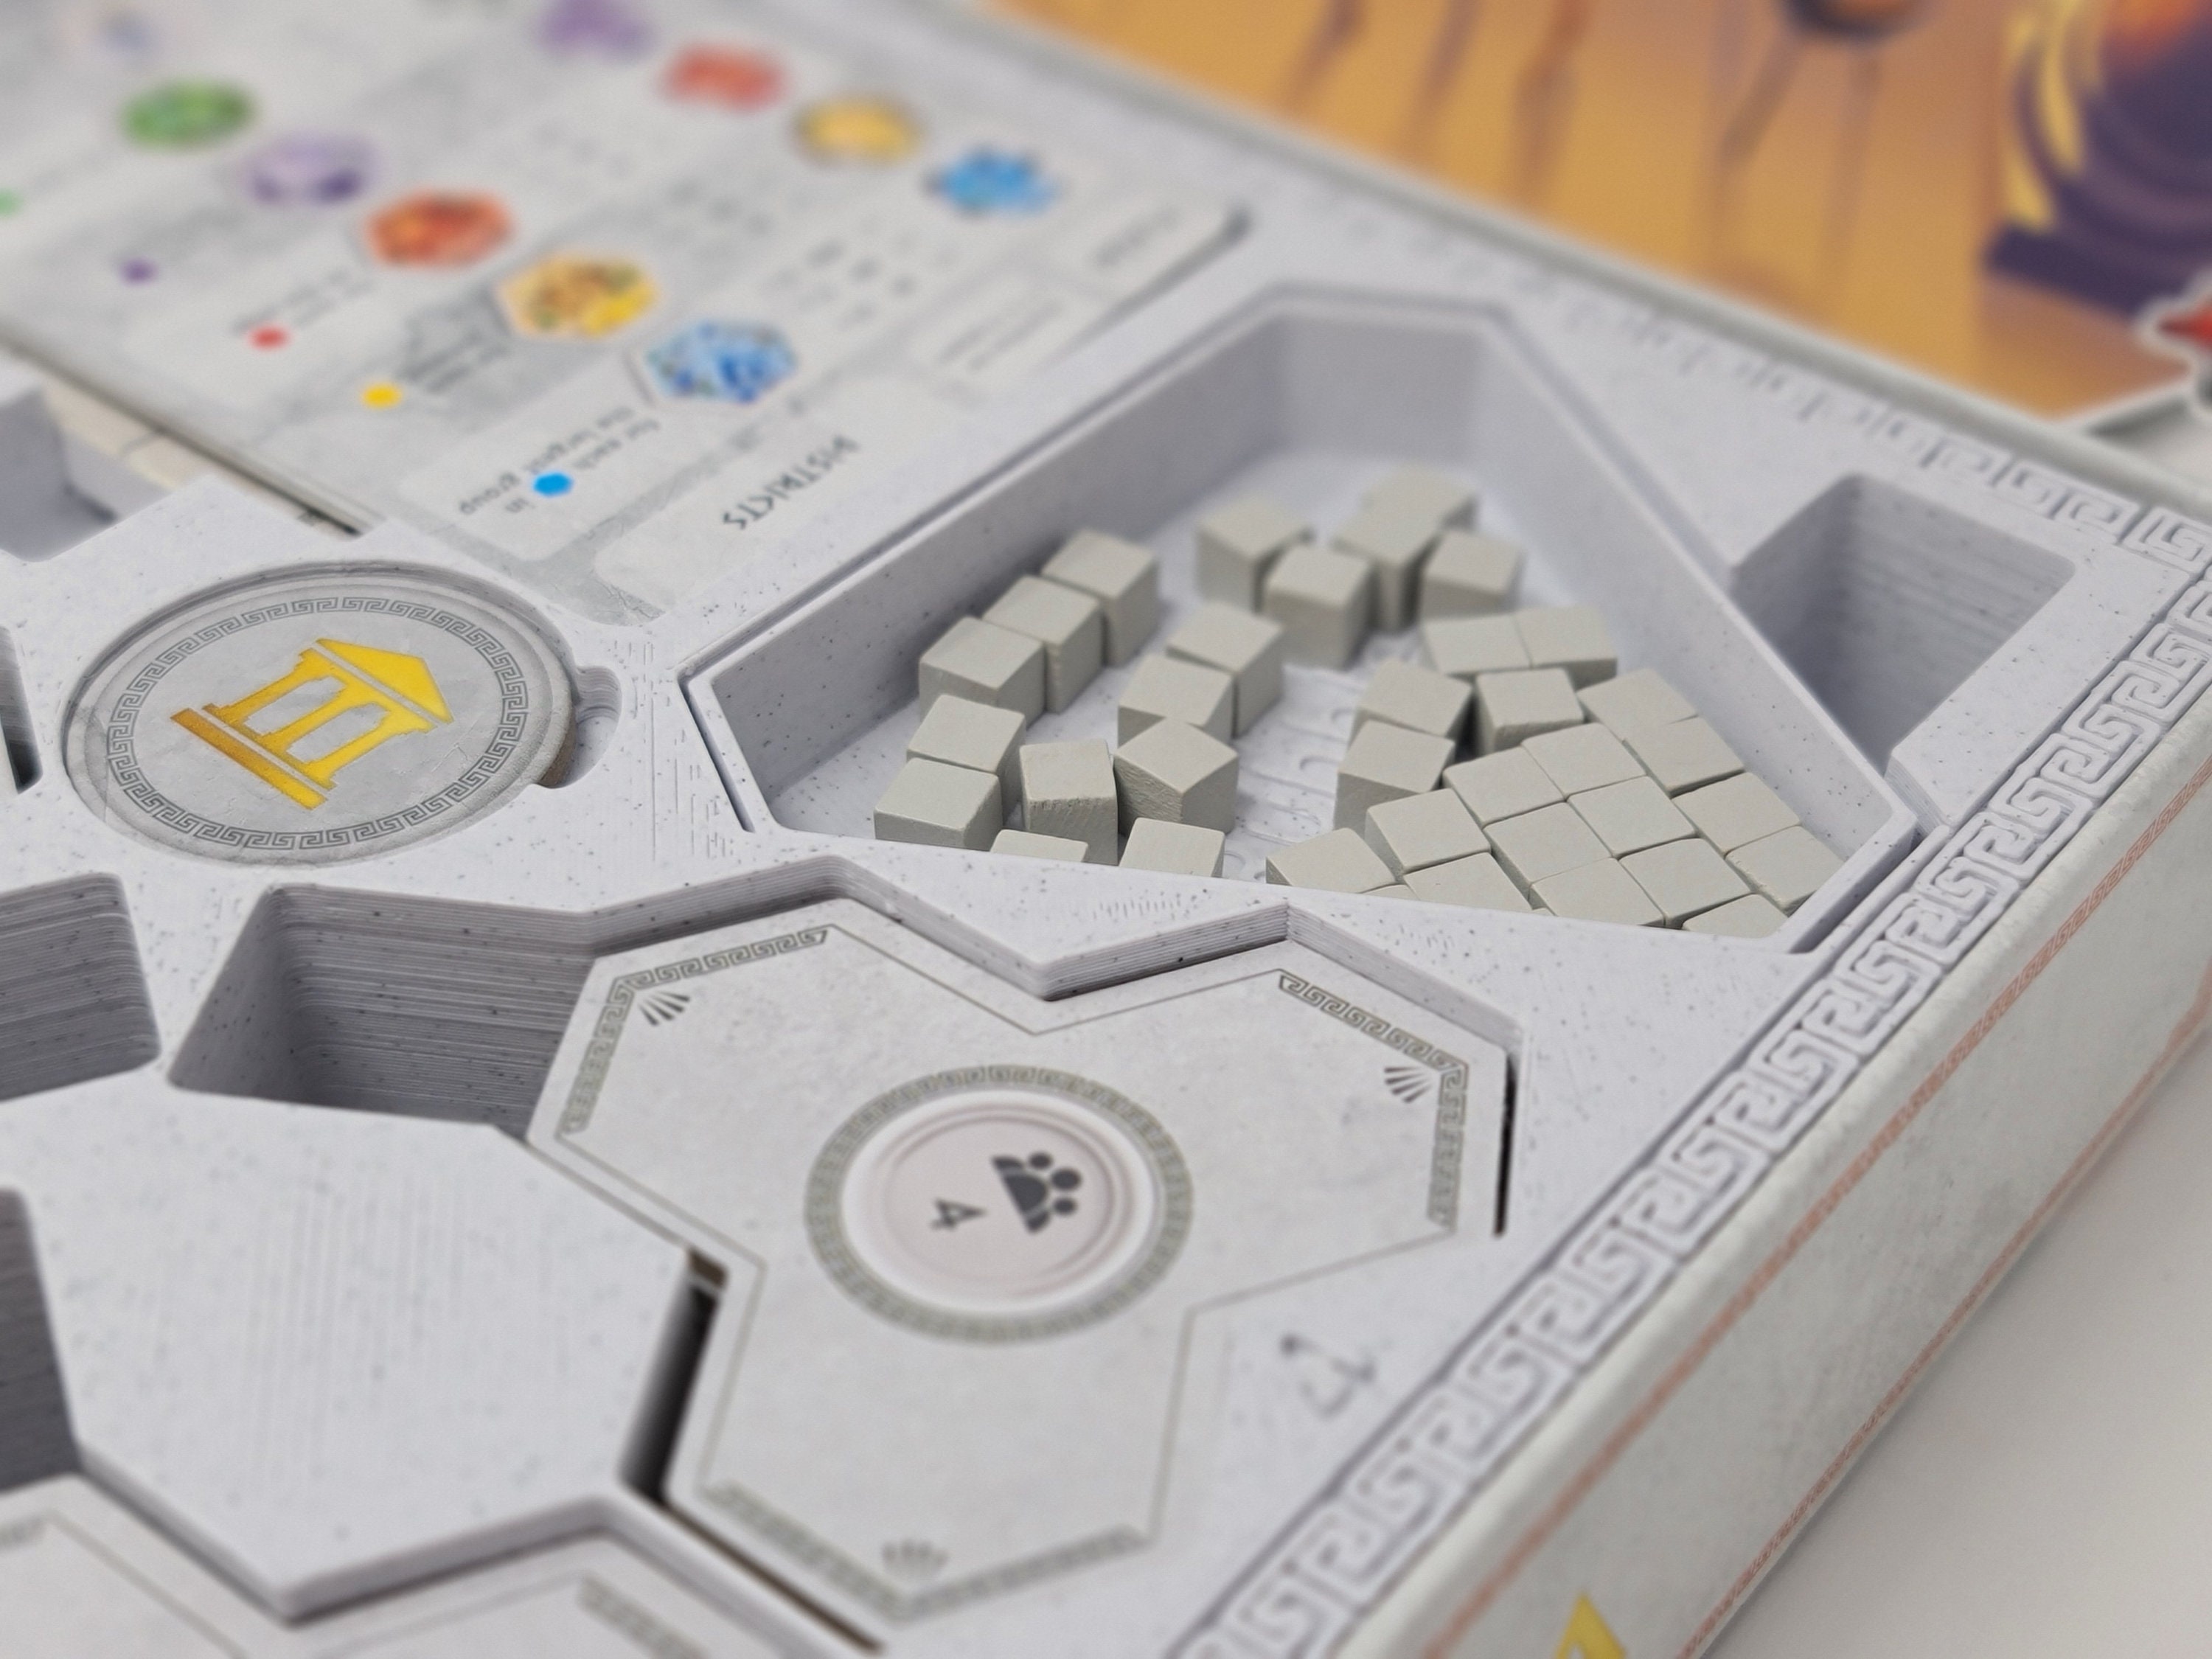 Akropolis Insert / Board Game Box Organizer 